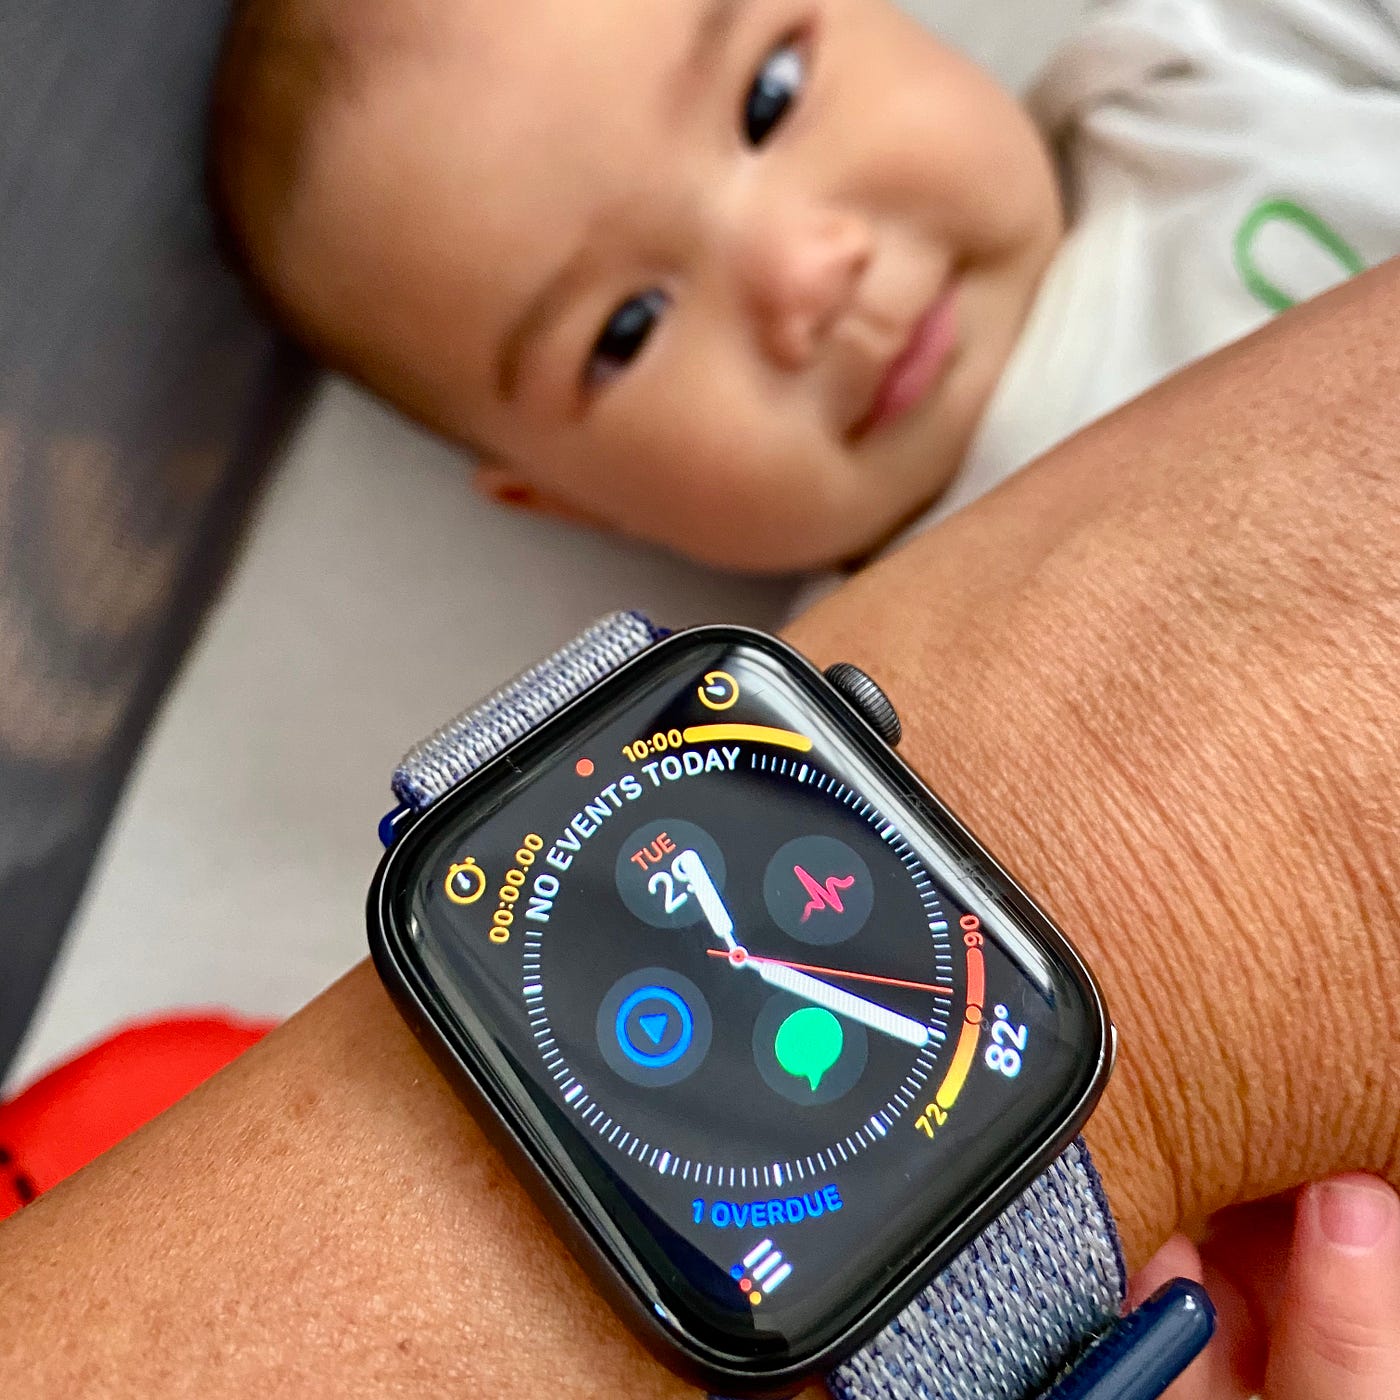 New Parent? Get An Apple Watch. You'll appreciate the help | by Jonathan  Kim | Mac O'Clock | Medium